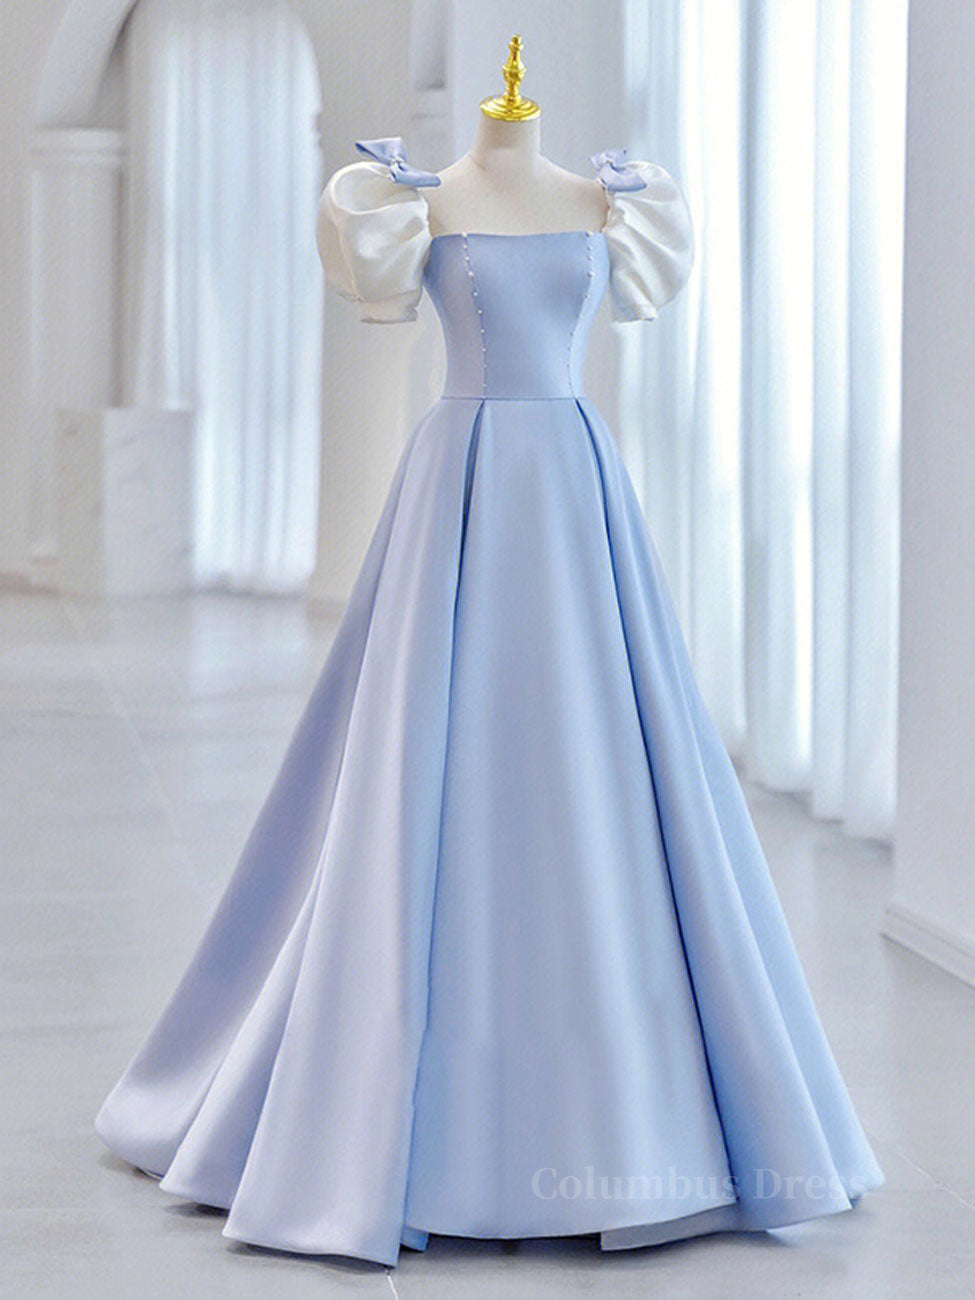 Blue Satin Long Corset Prom Dresses, Blue Corset Formal Graduation Dresses outfit, Prom Dresses For Curvy Figures